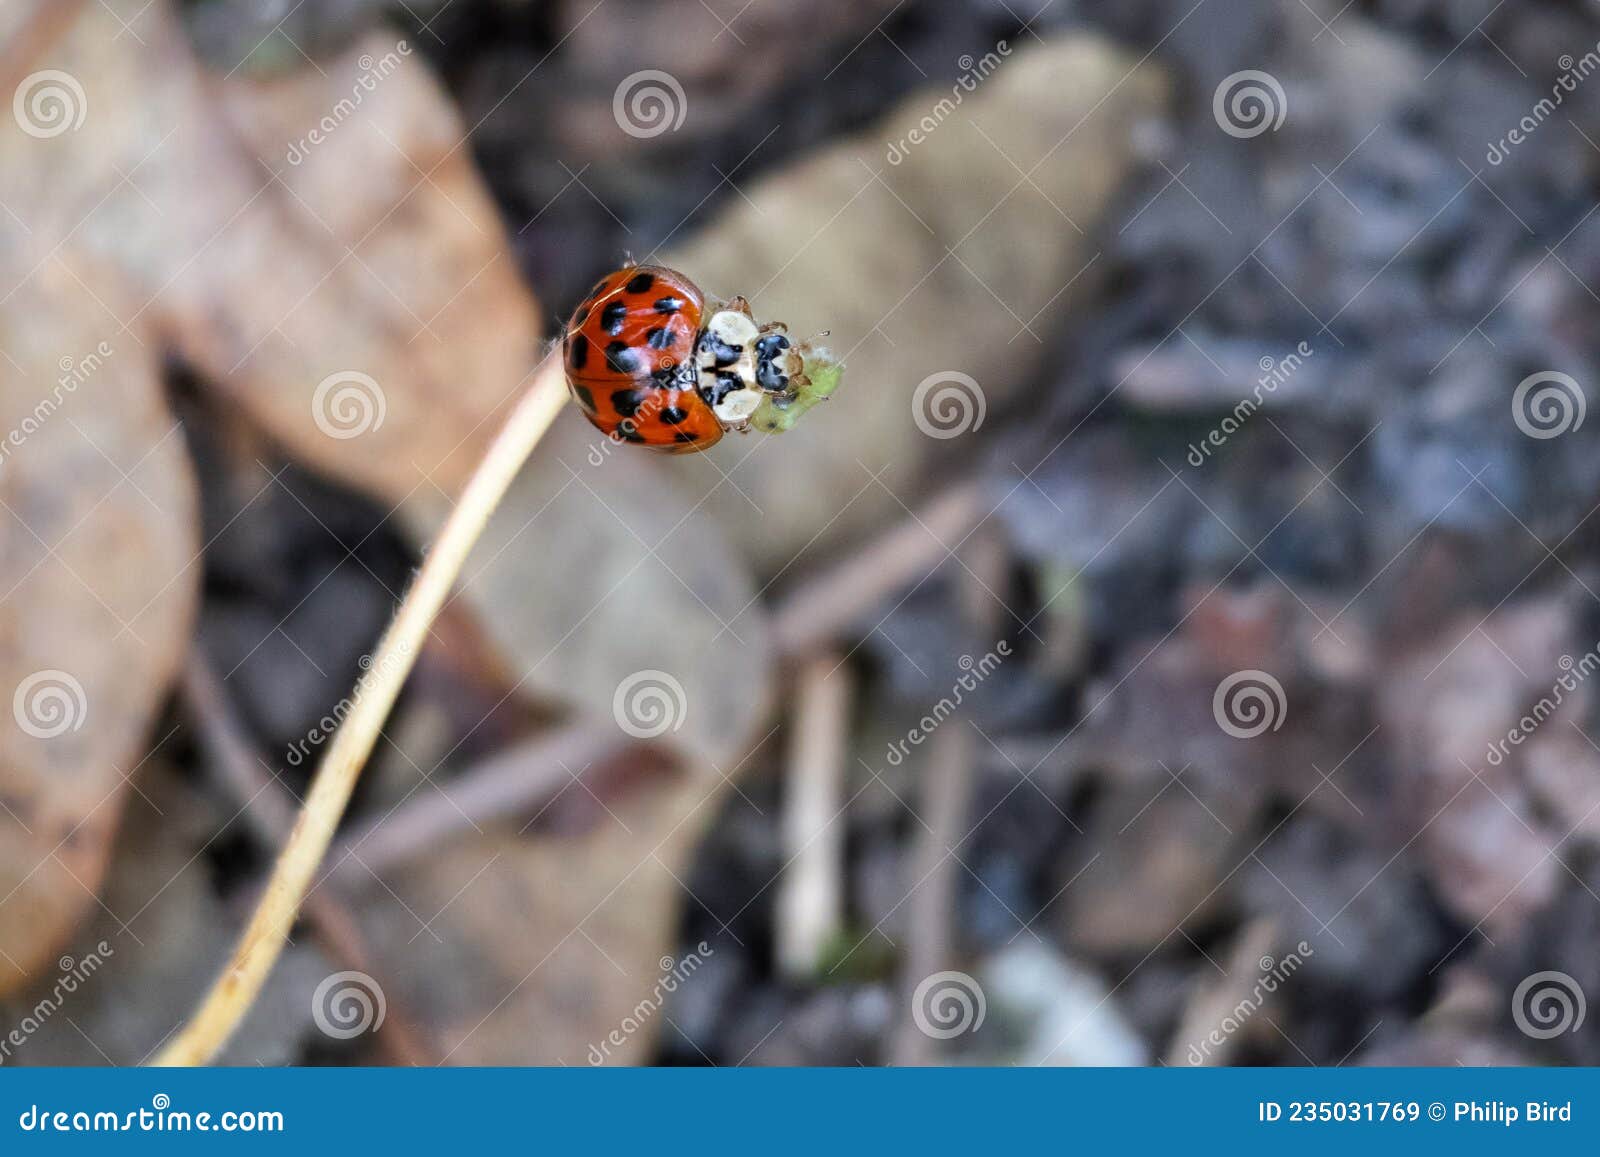 eyed ladybird resting on a leaf stem